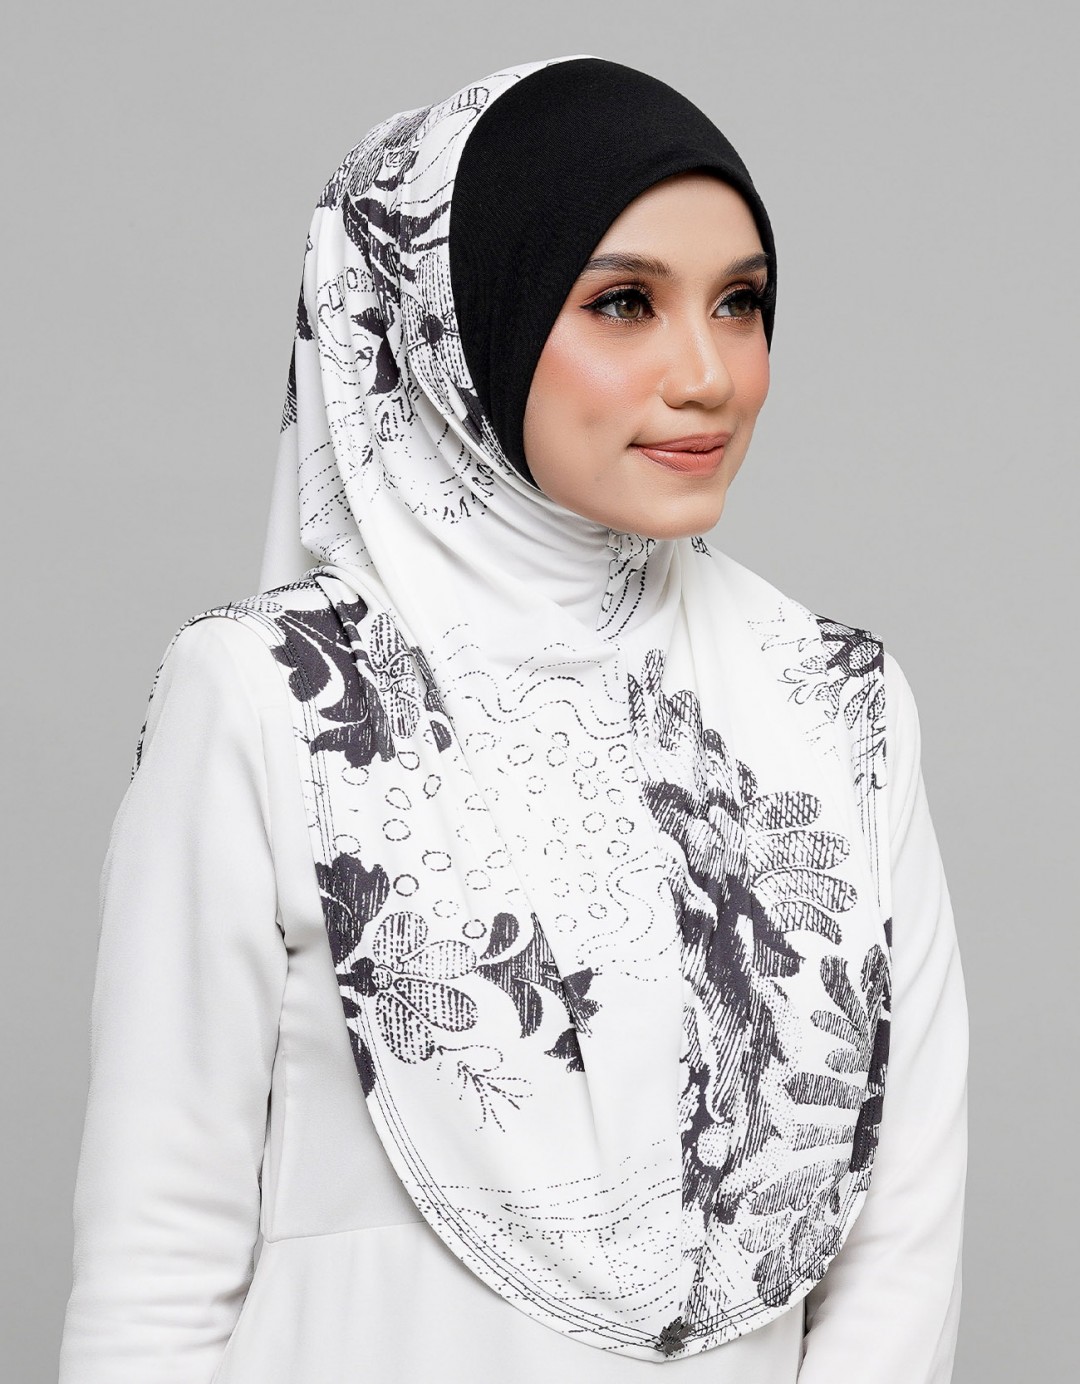 Express Hijab Damia Signature 07 - Black Edition